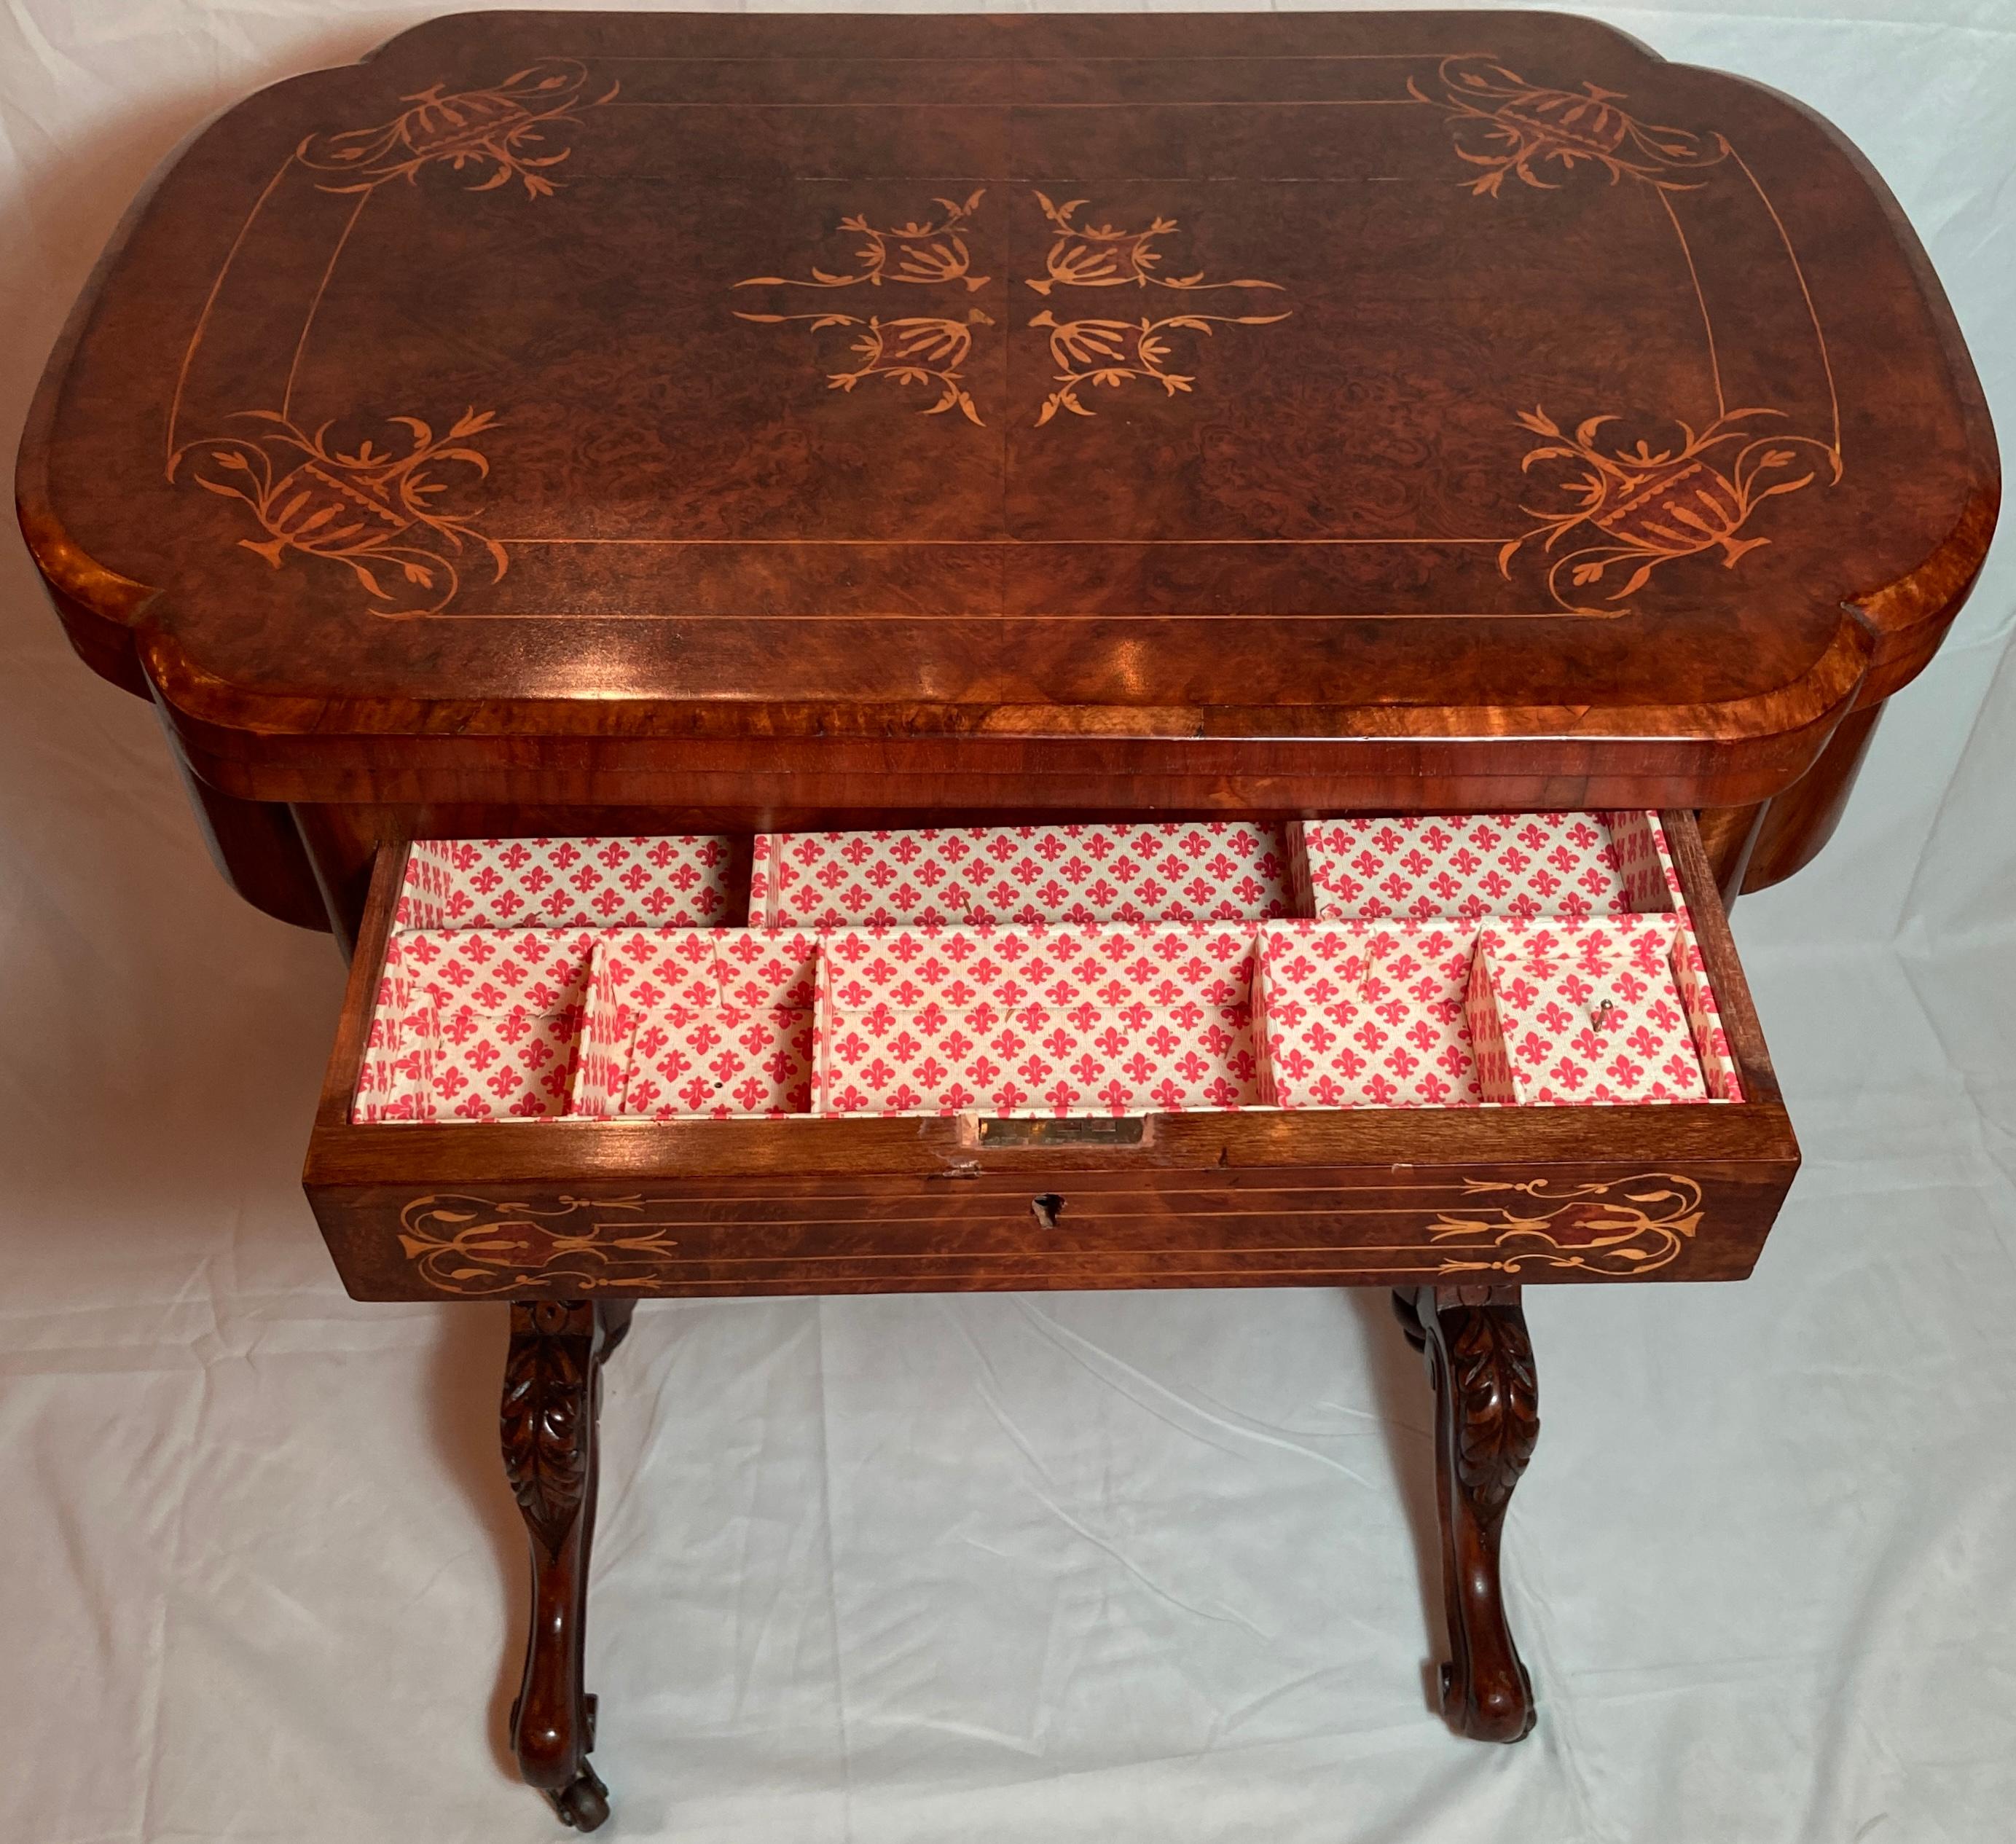 19th Century Antique English Burled Walnut Satinwood Inlaid Games Table, Circa 1865-1885